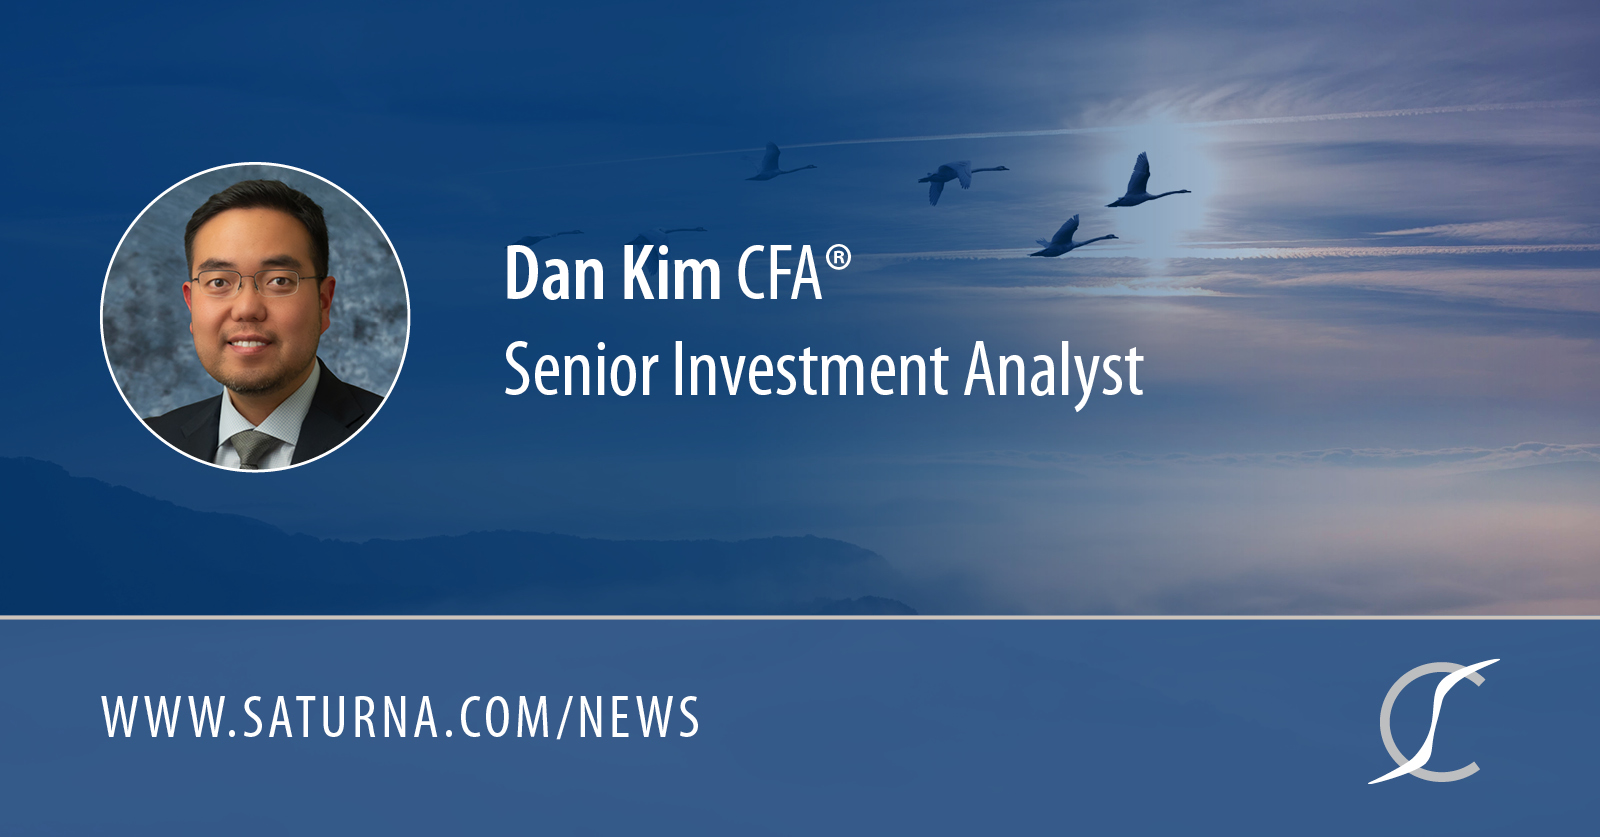 Dan Kim, CFA - Senior Investment Analyst